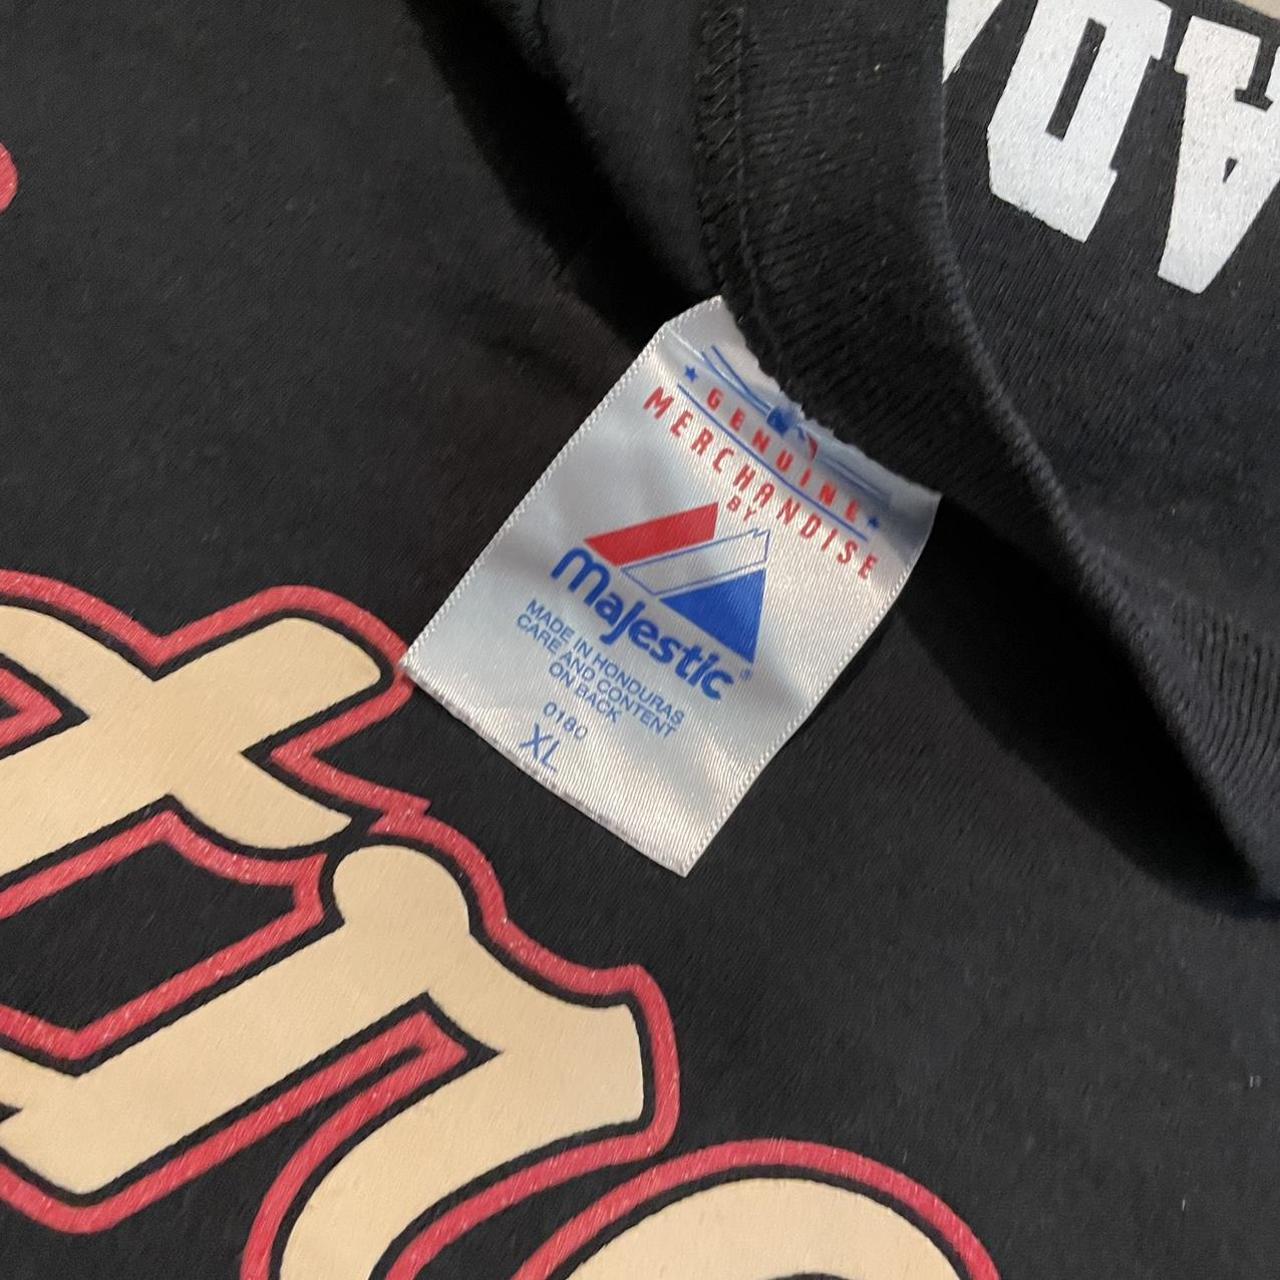 Houston Astros T-shirts Mens Size XL Stadium giveaway - Depop